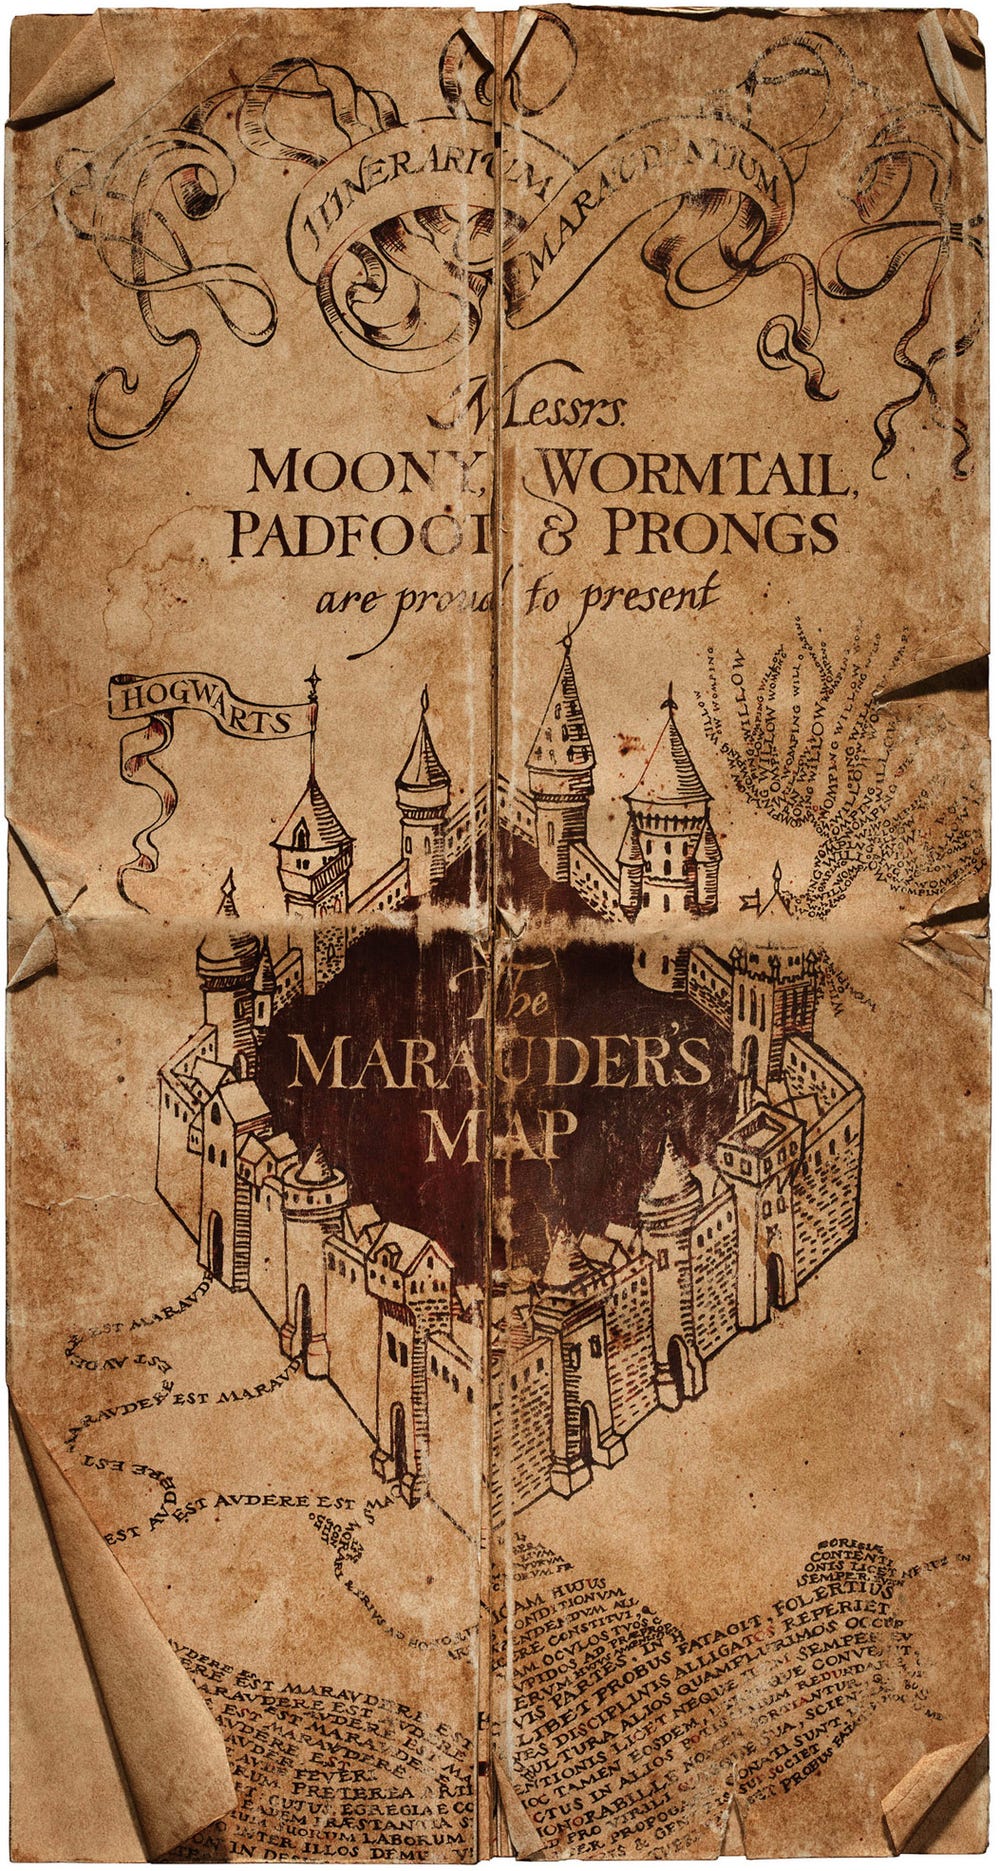 The Marauder's Map: Unveiling Secrets of Hogwarts